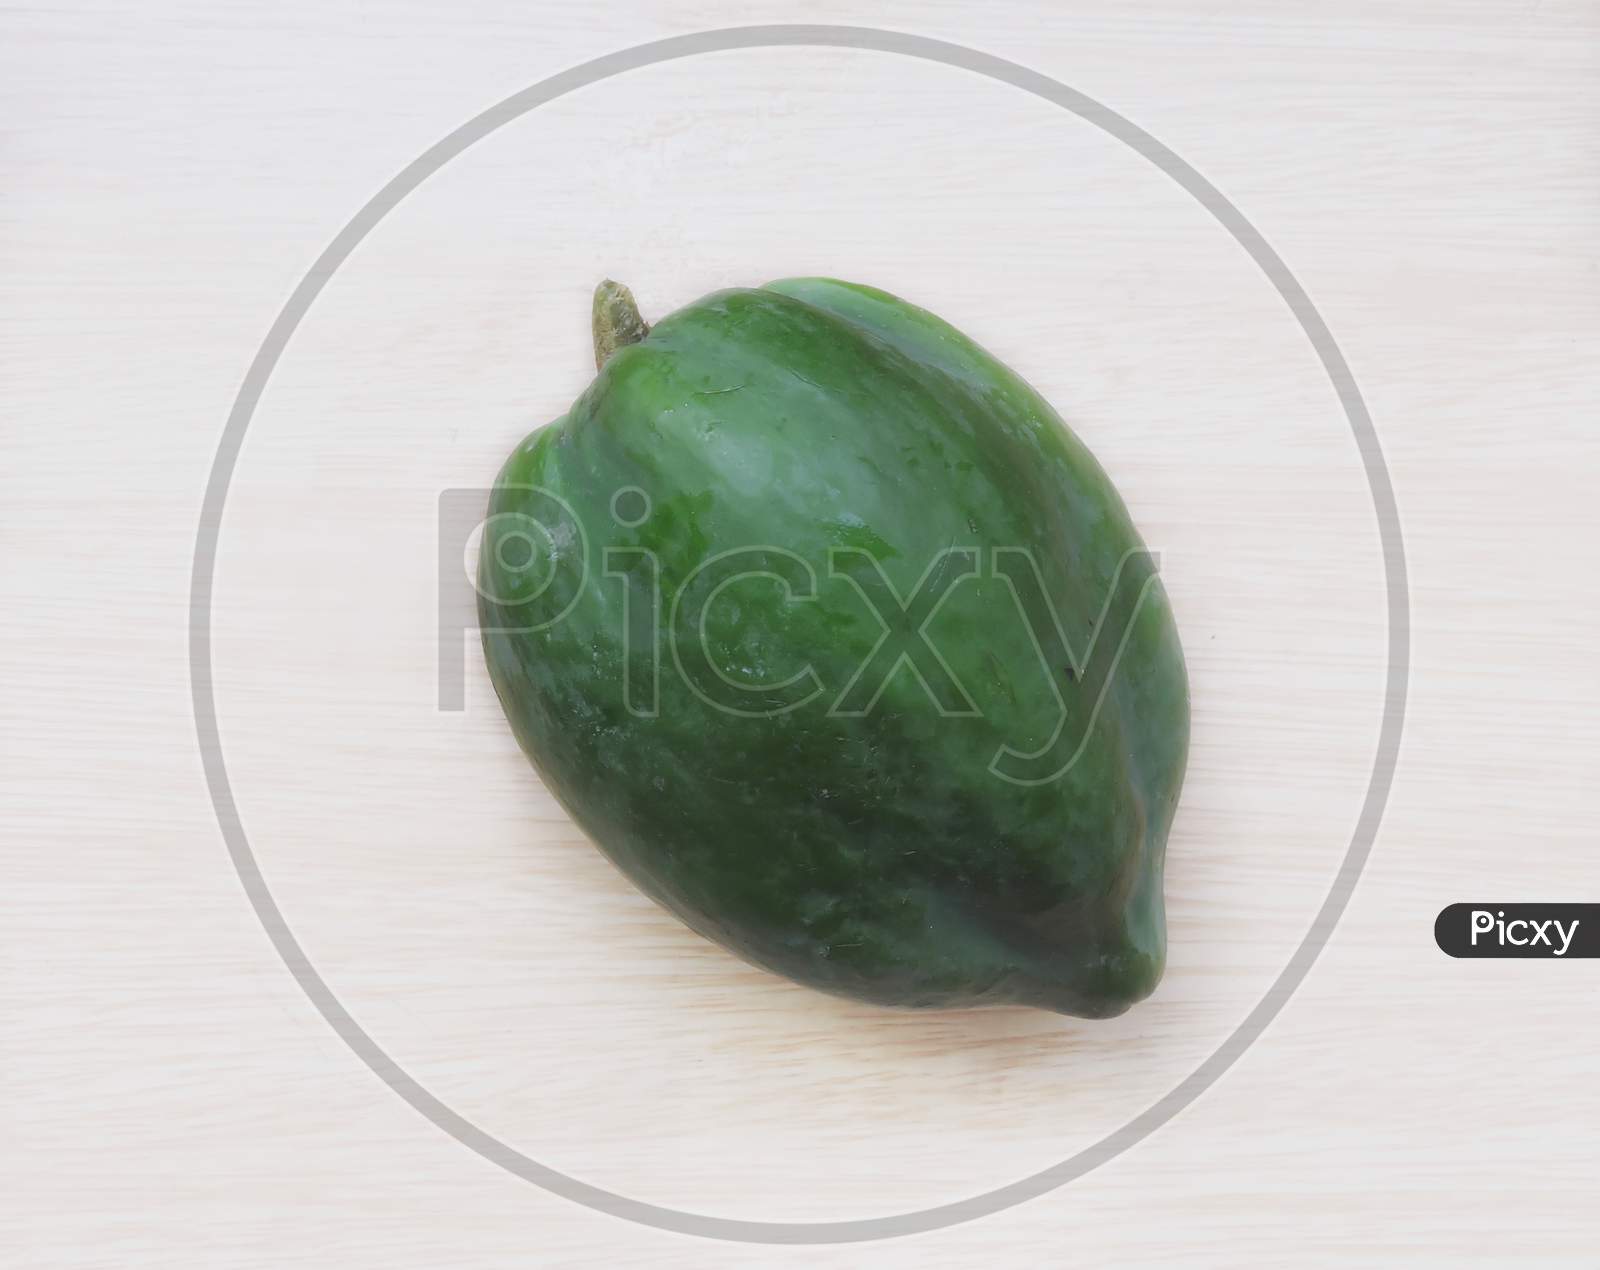 Raw Papaya vegetable in isolated background